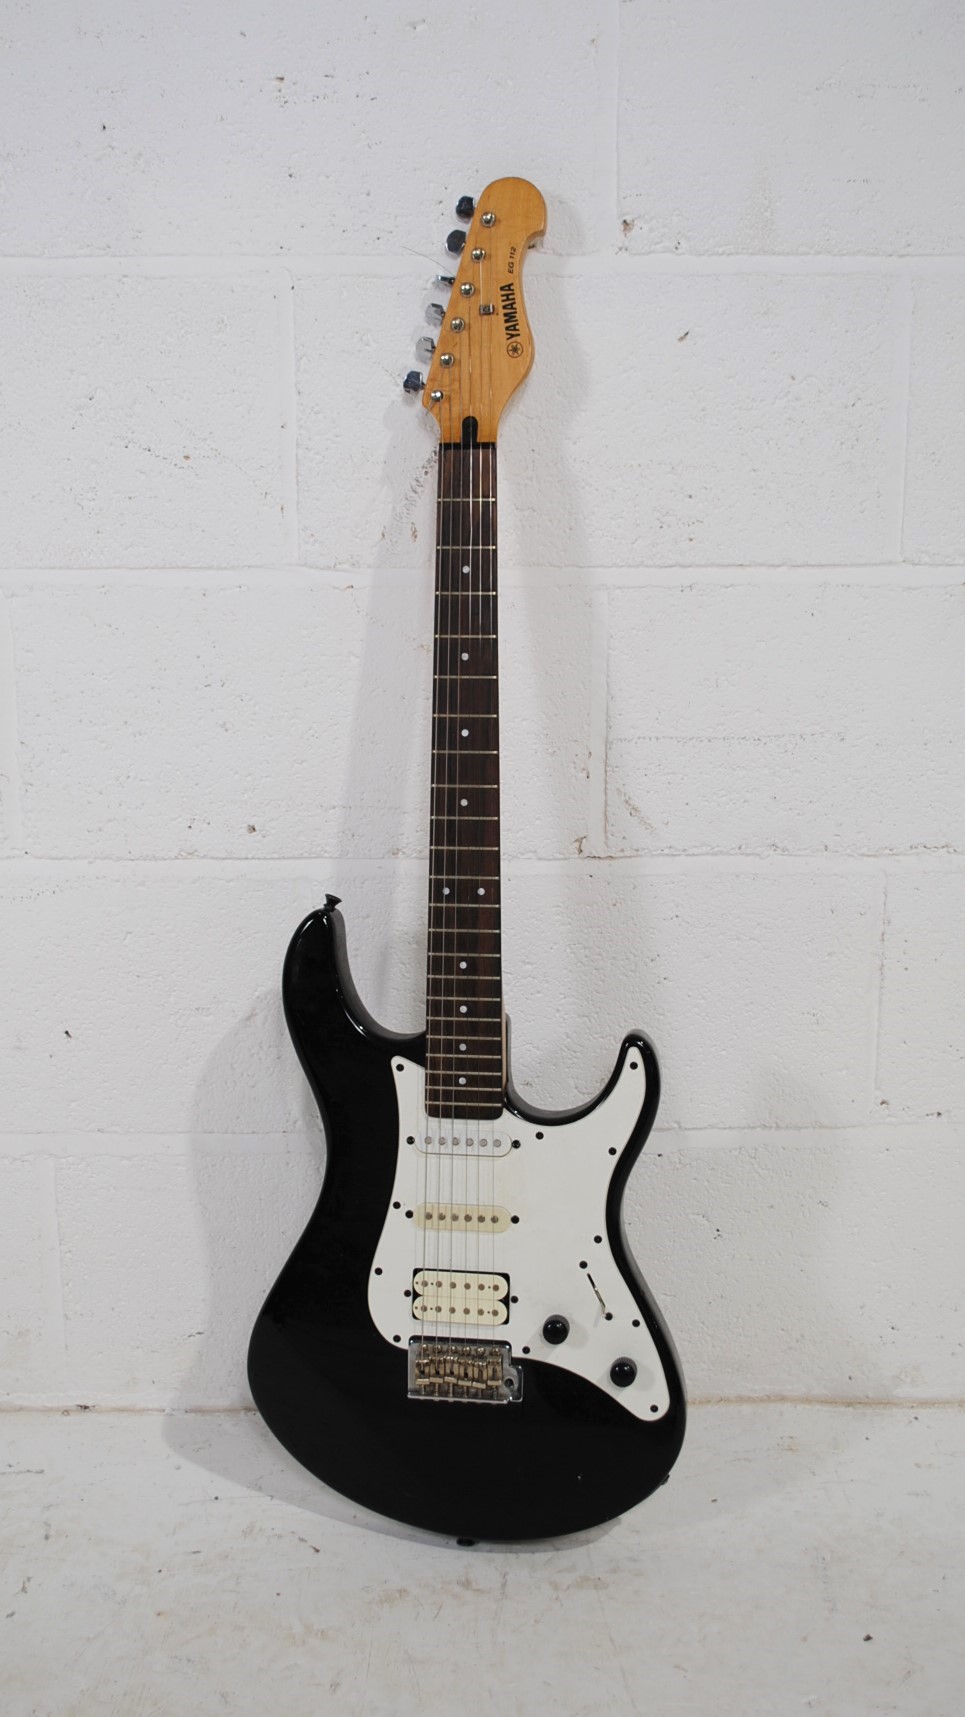 A Yamaha EG 112 black Stratocaster electric guitar